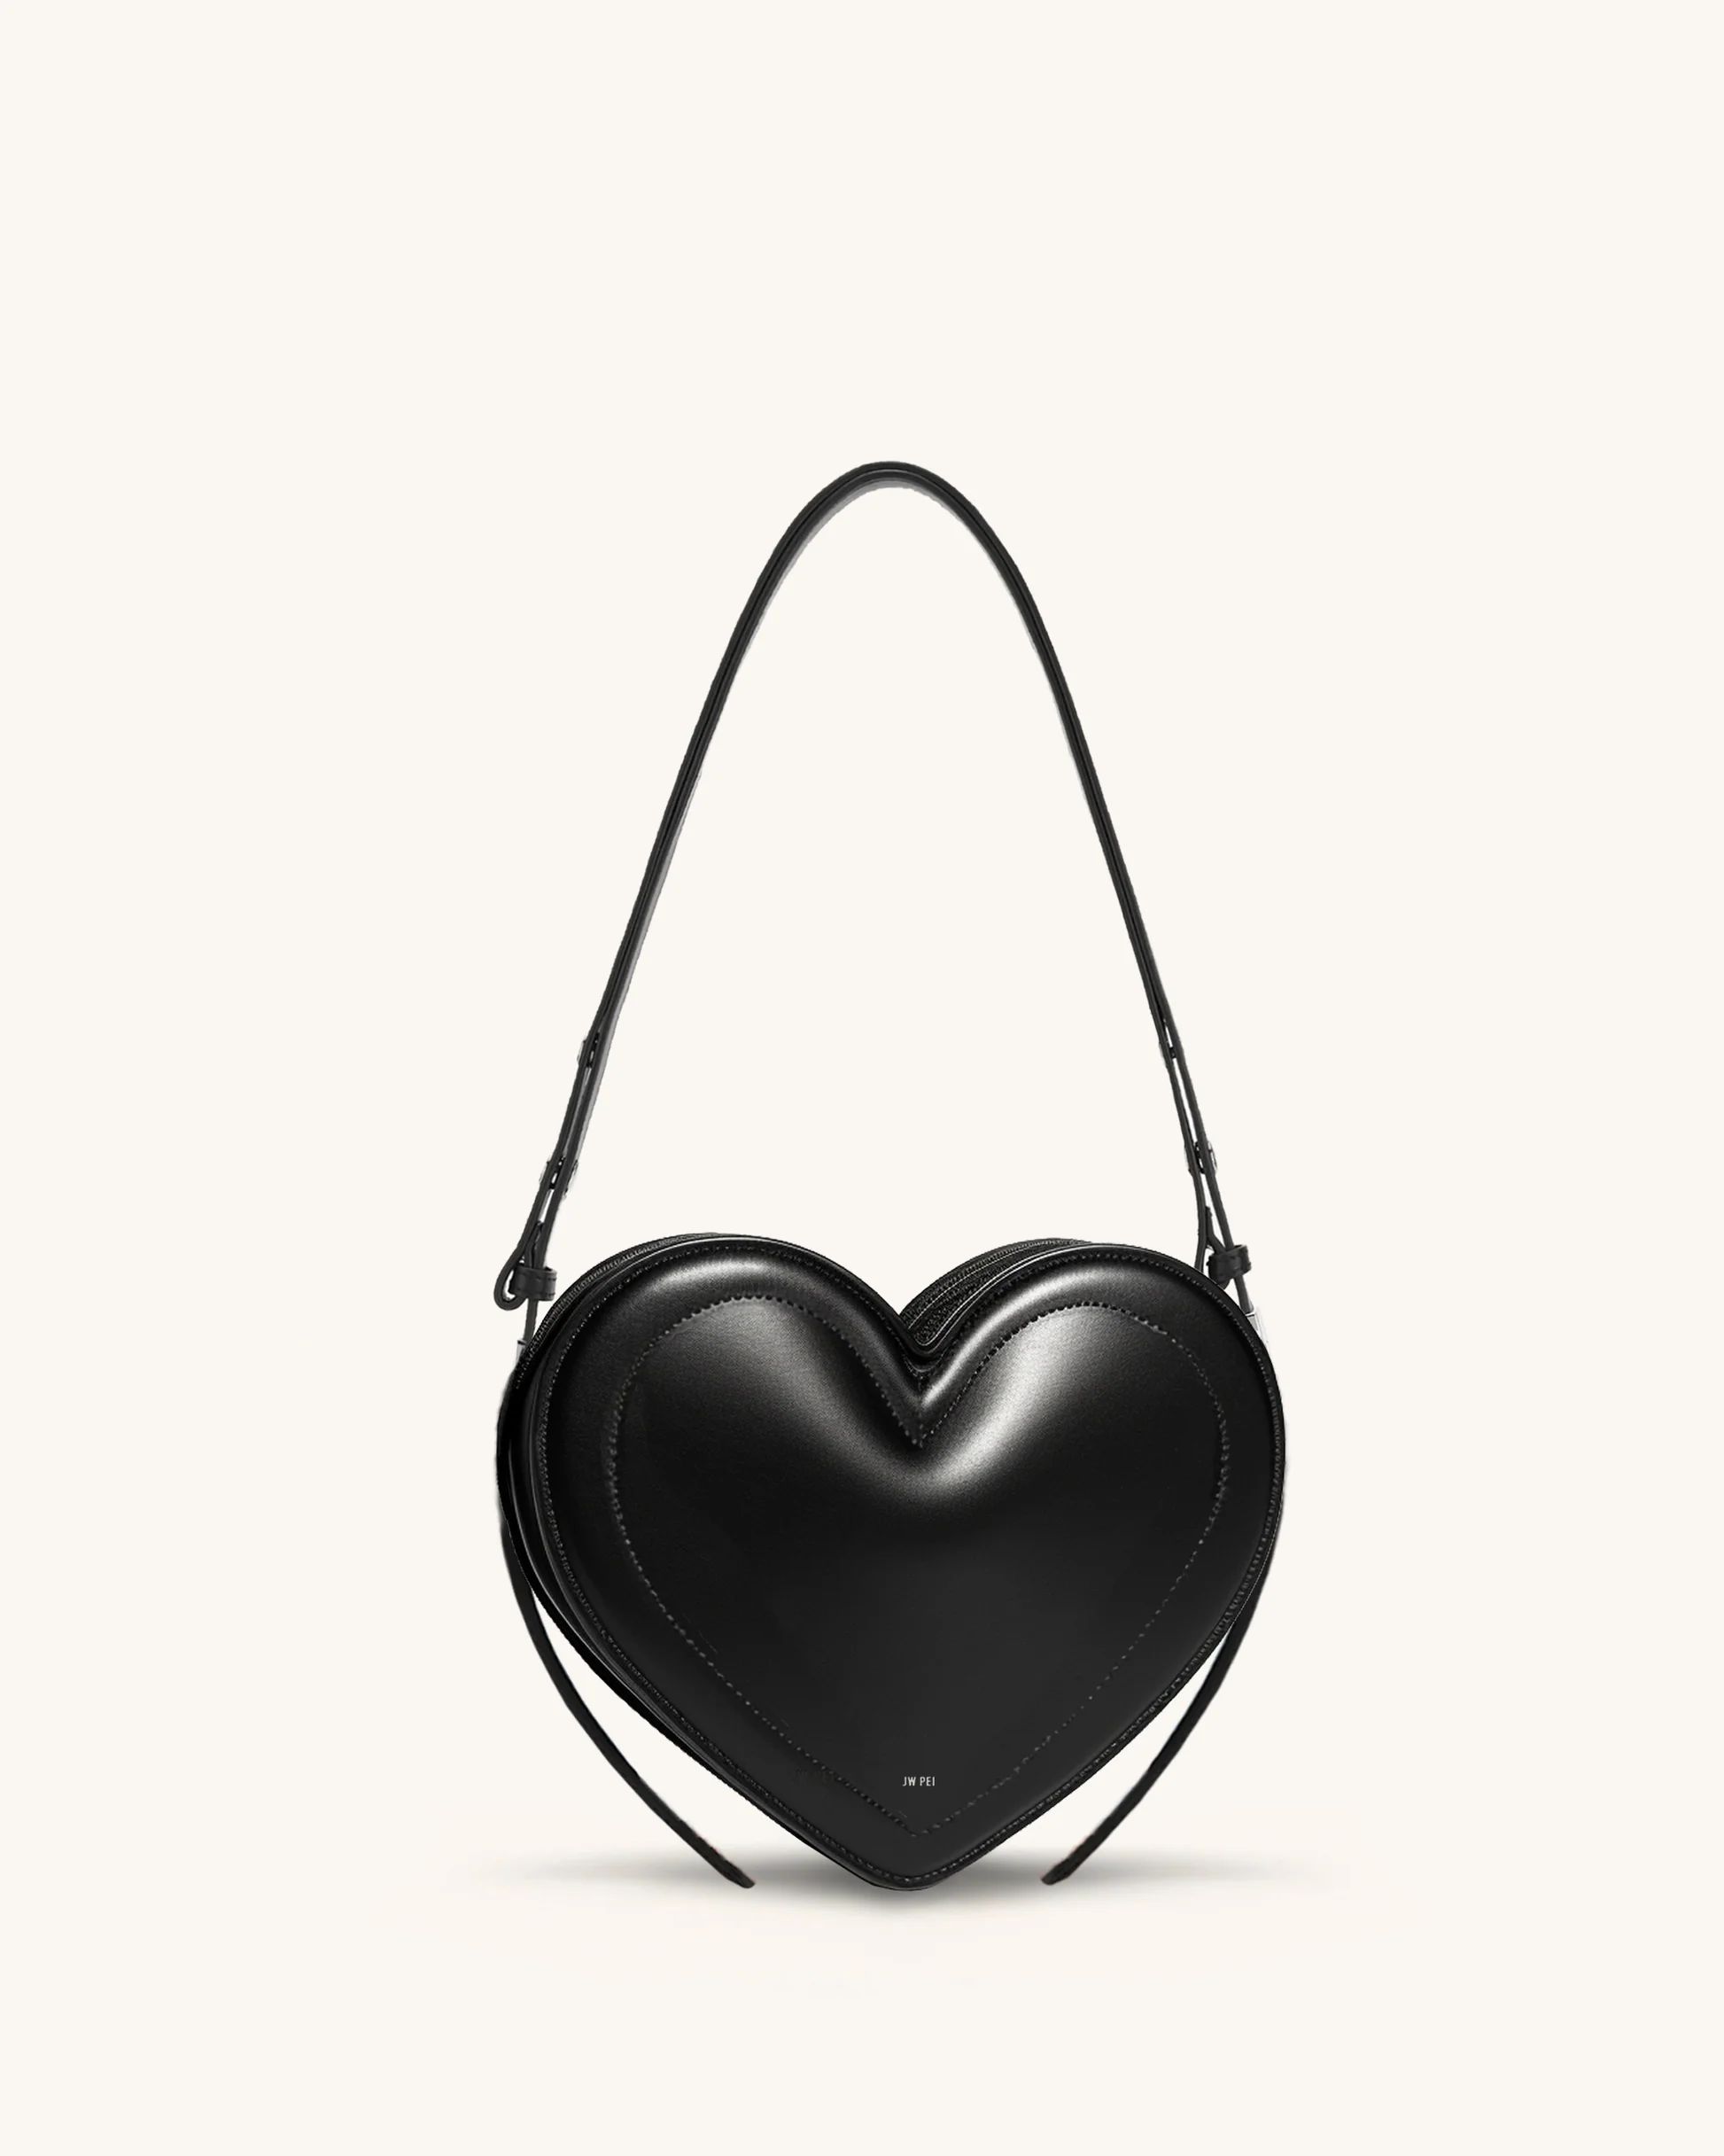 Arlene Heart shaped bag - Black | JW PEI US